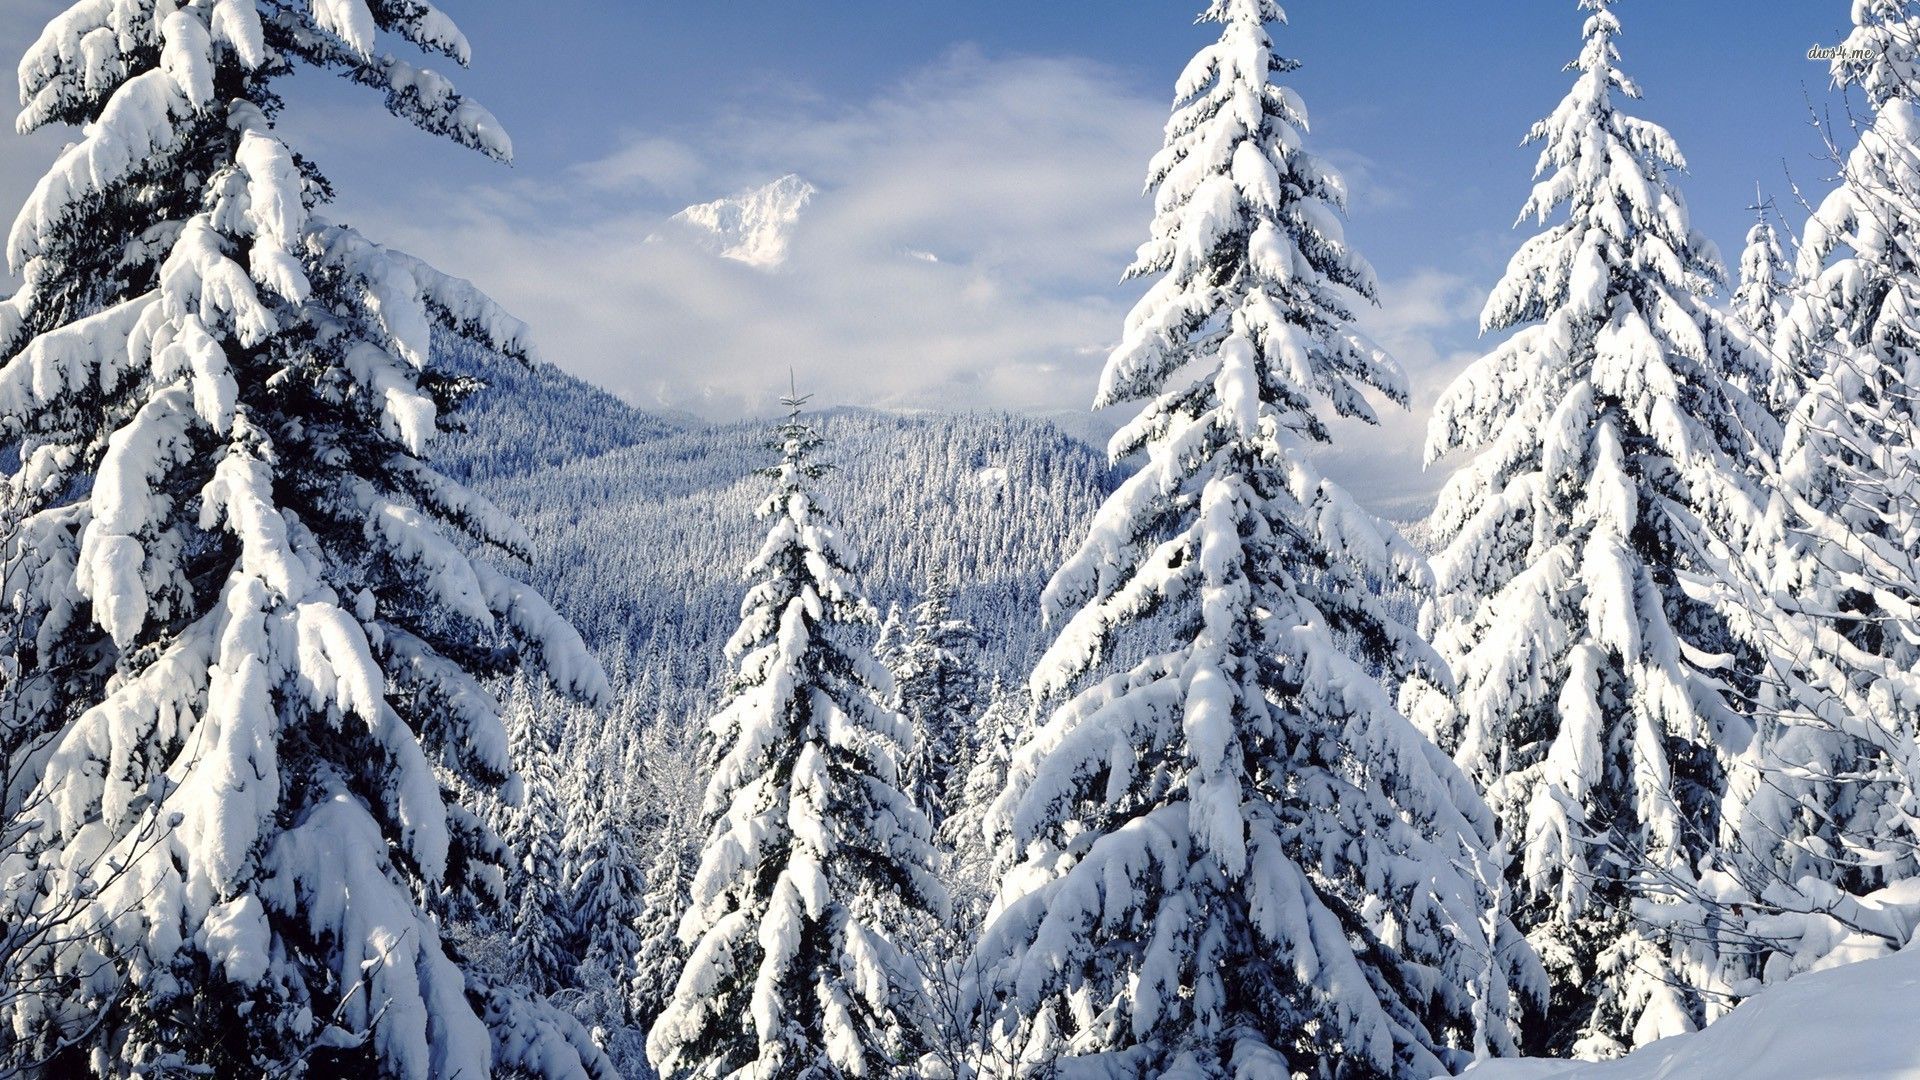 Snowy Trees Wallpaper - WallpaperSafari | Winter | Pinterest